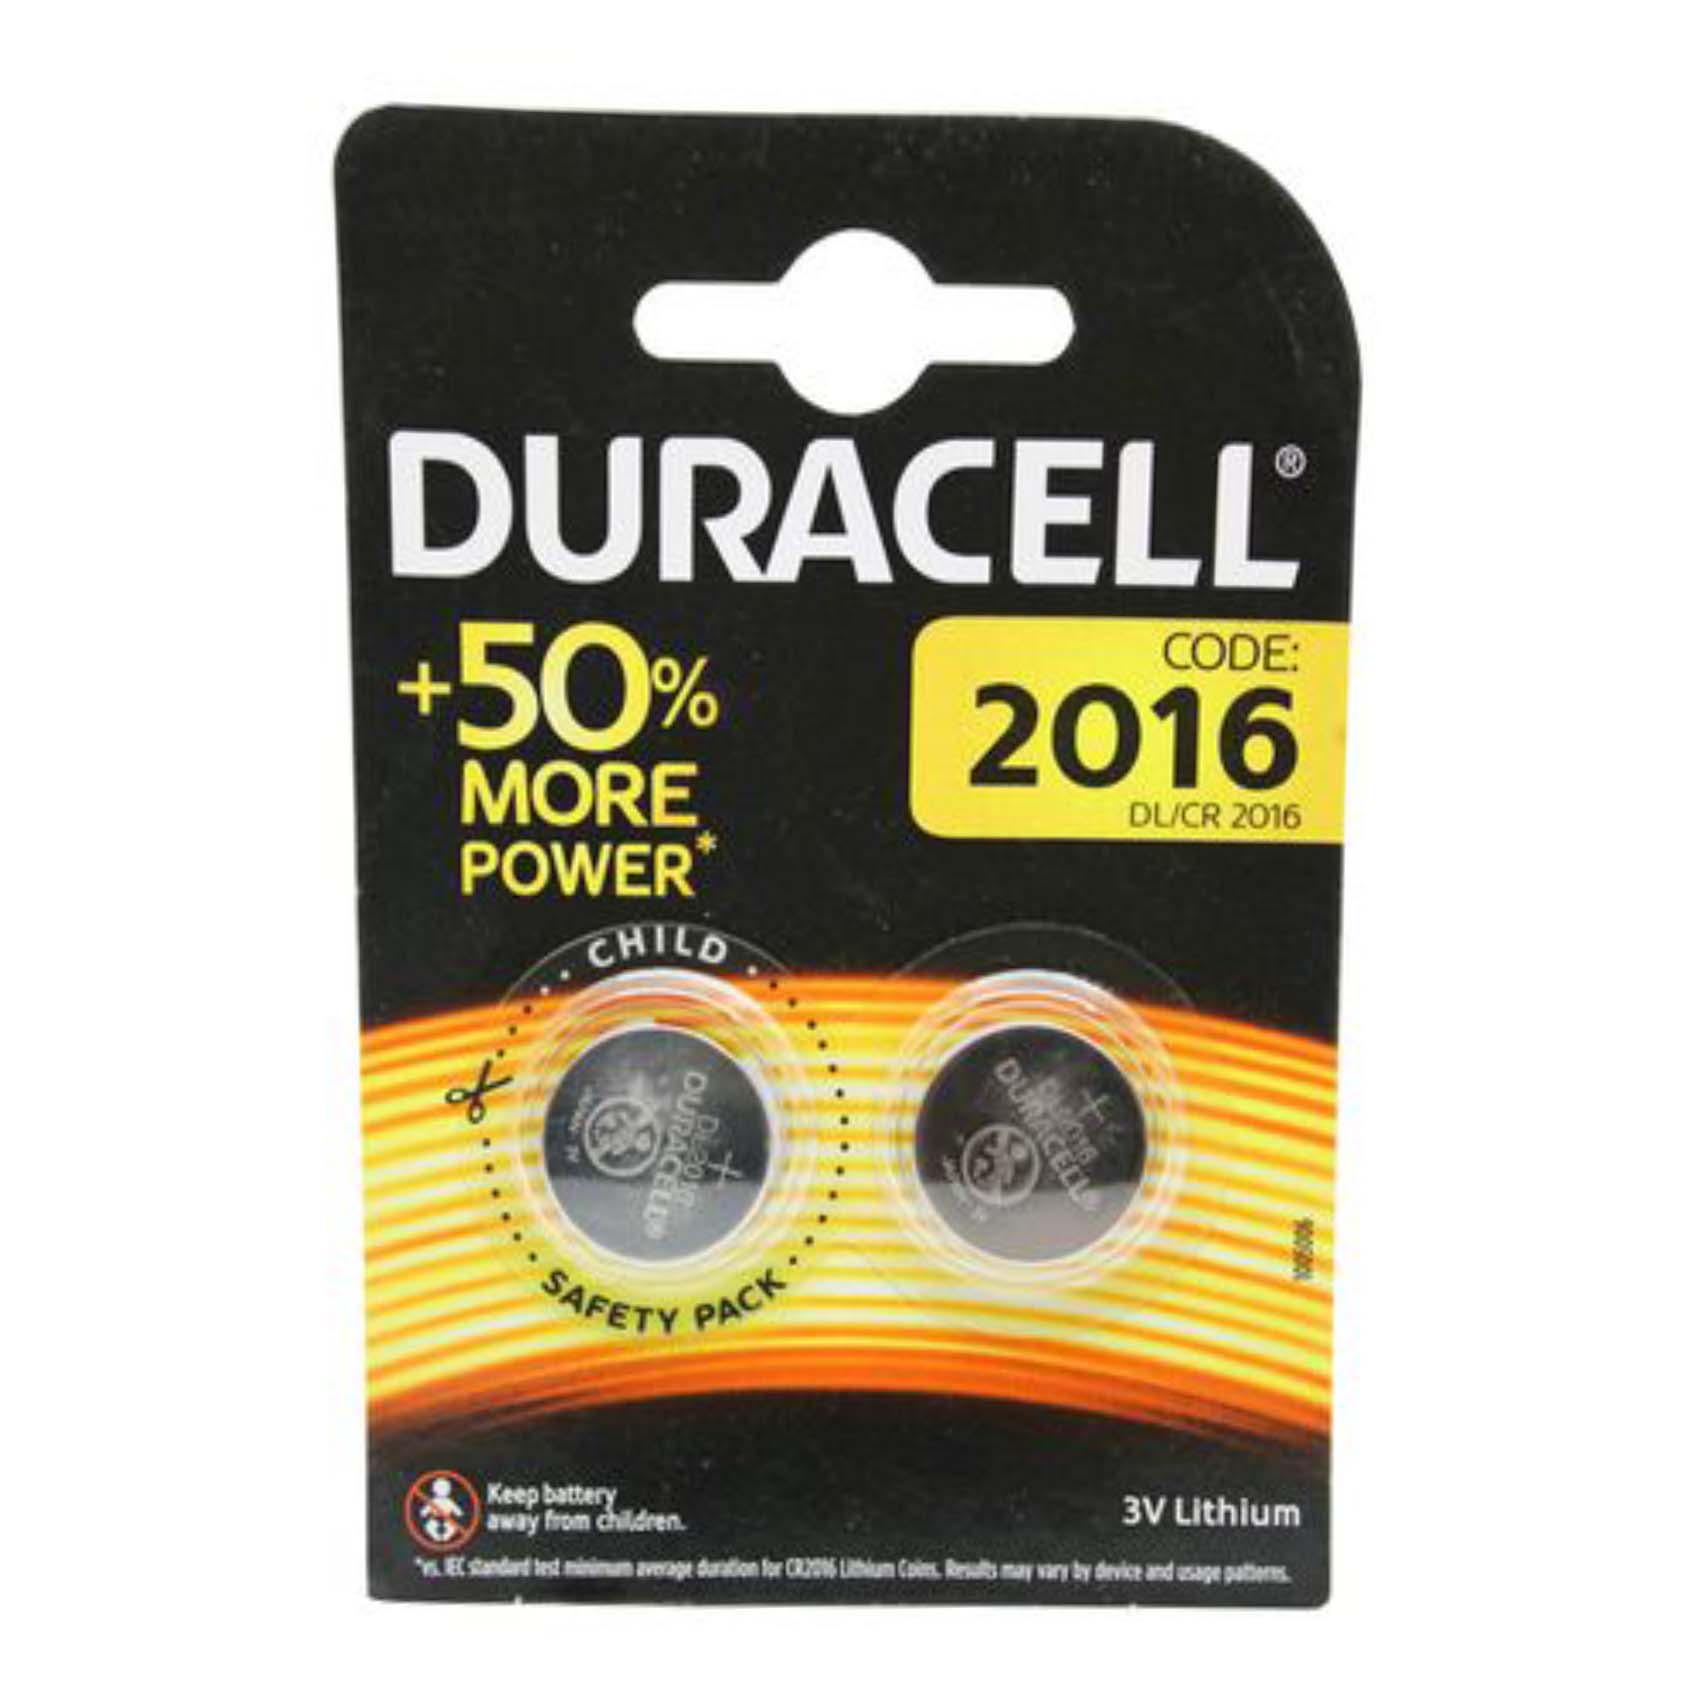 Duracell Lithium 2016 2 pcs